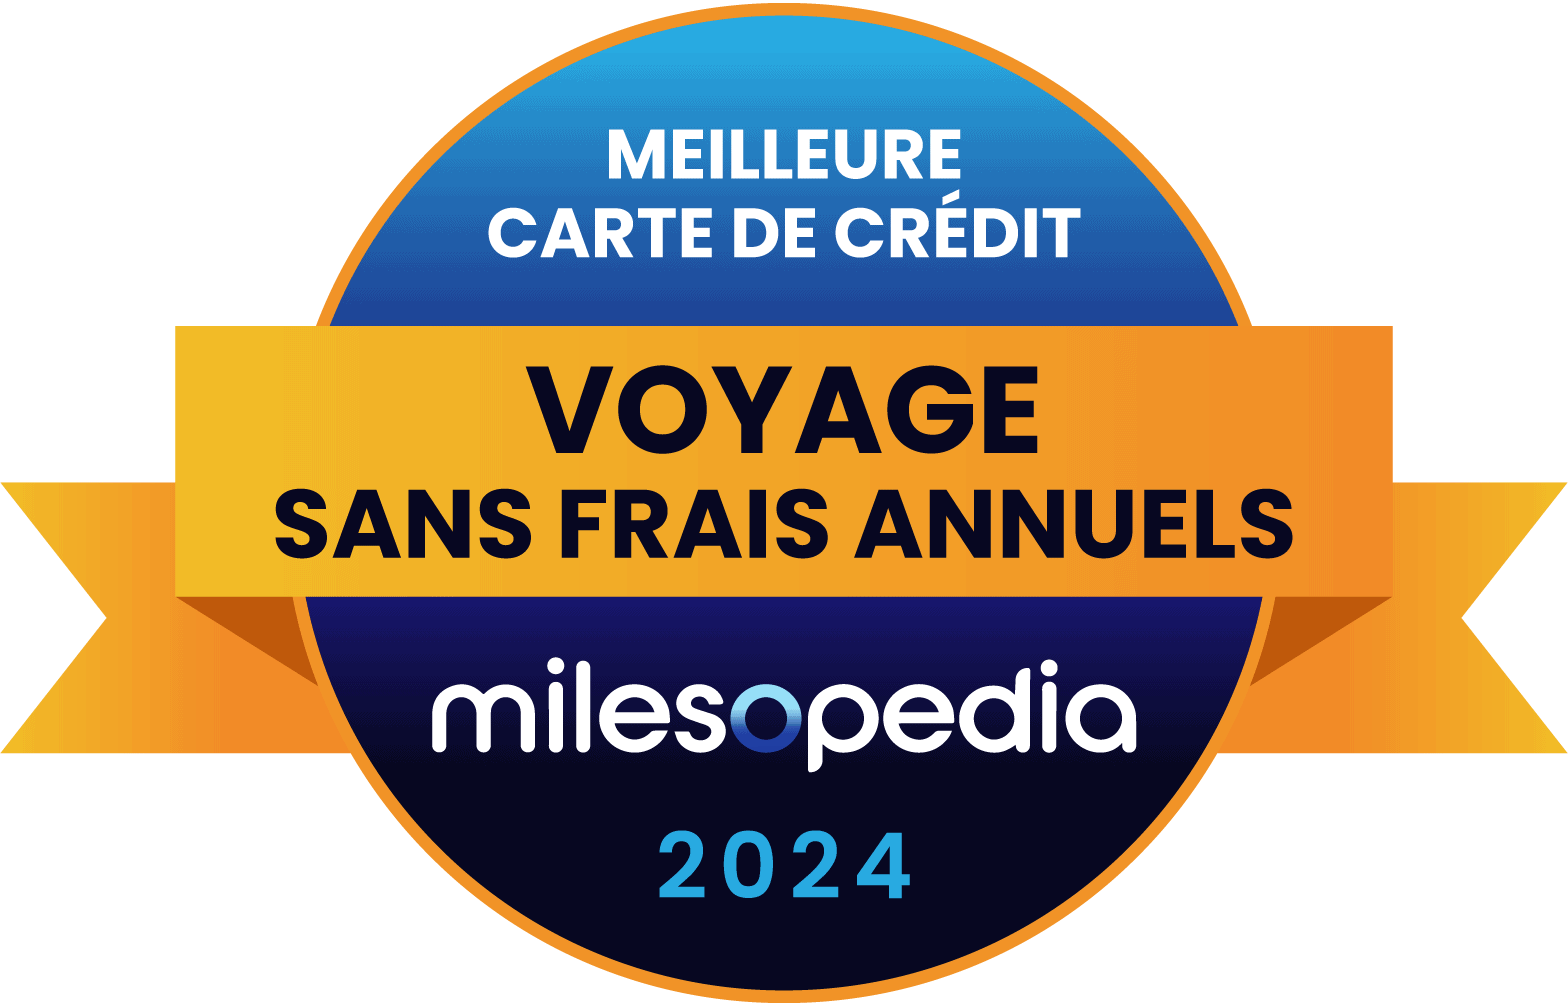 VoyageSansFraisAnnuels MeilleureCarteDeCredit Milesopedia 2024